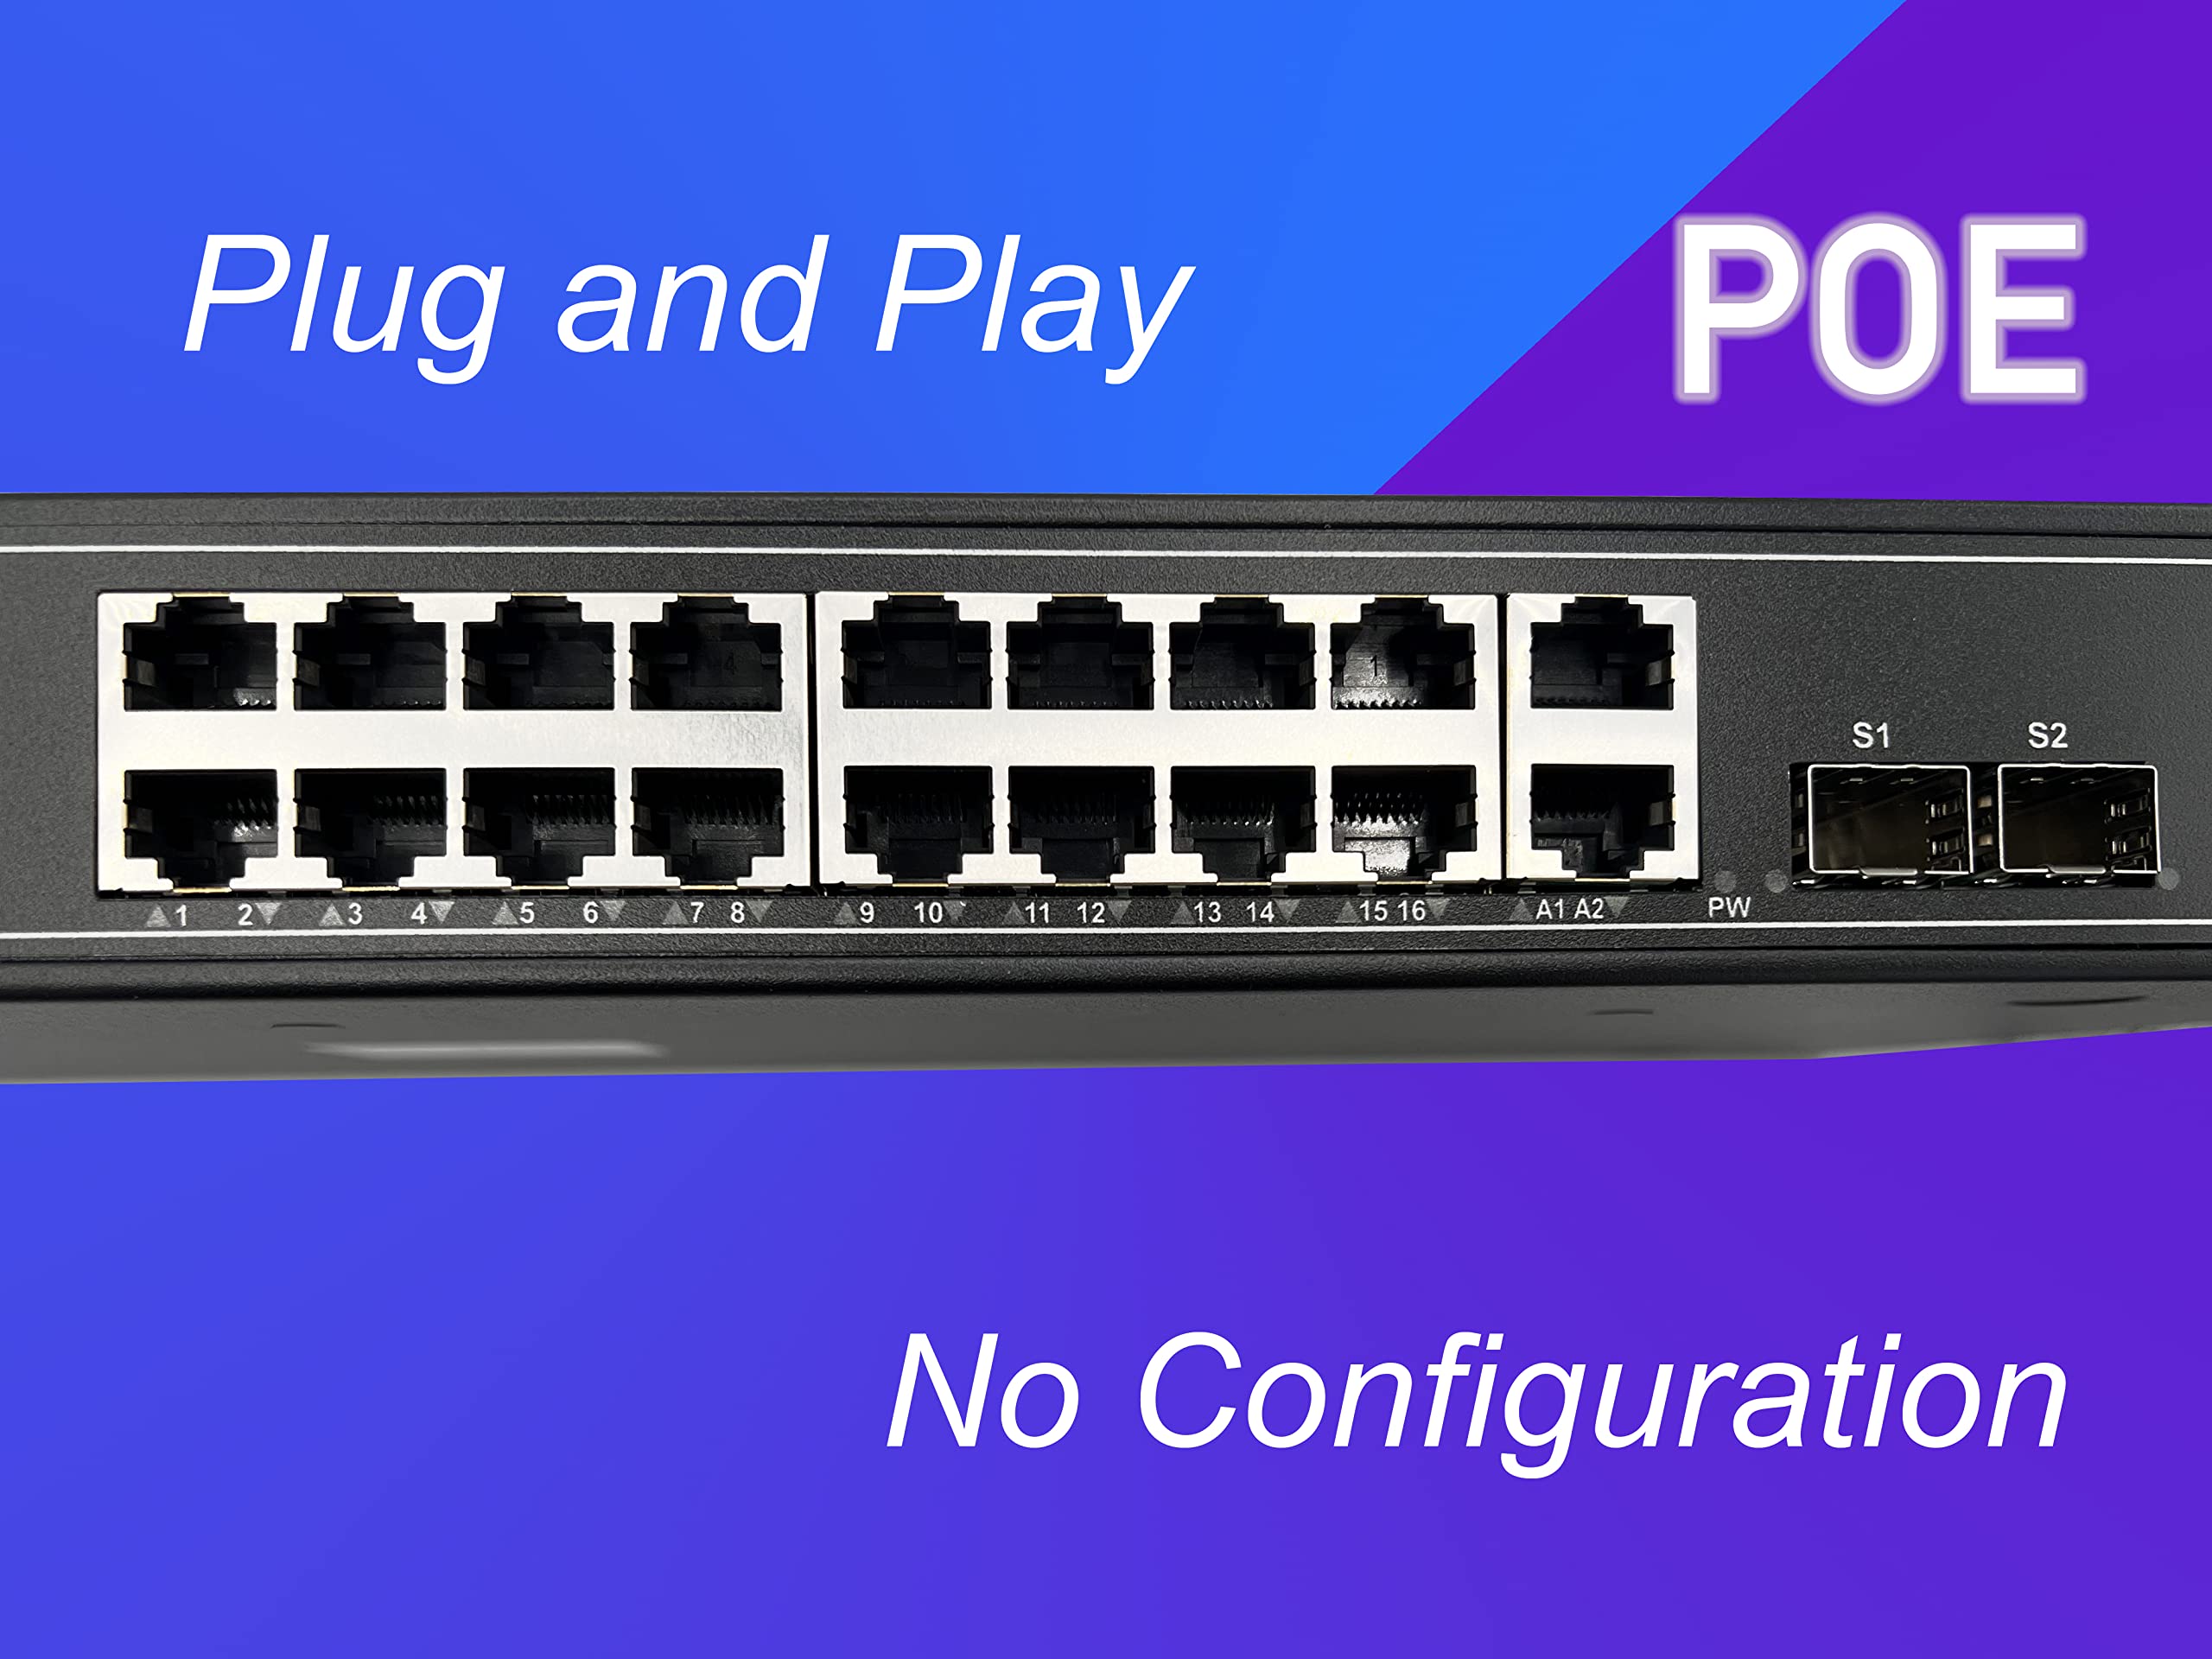 16-port Gigabit PoE Switch with 2 1,25GB SFP Ports Plug & Play – Elfcam